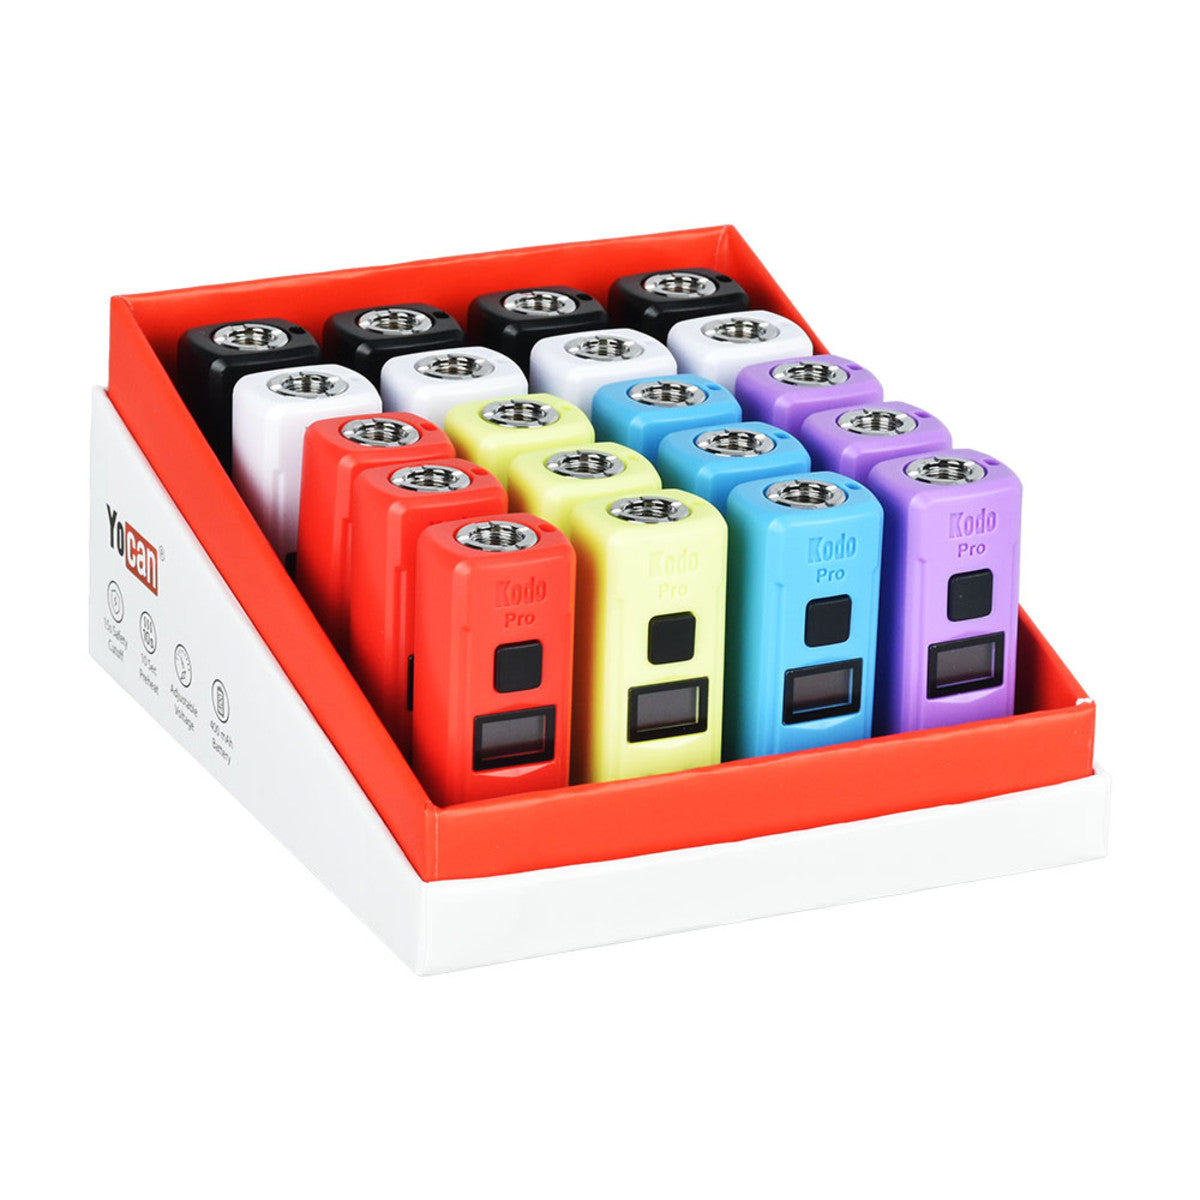 Yocan Kodo Pro 510 Box Mod Vape Cartridge Battery Display Box